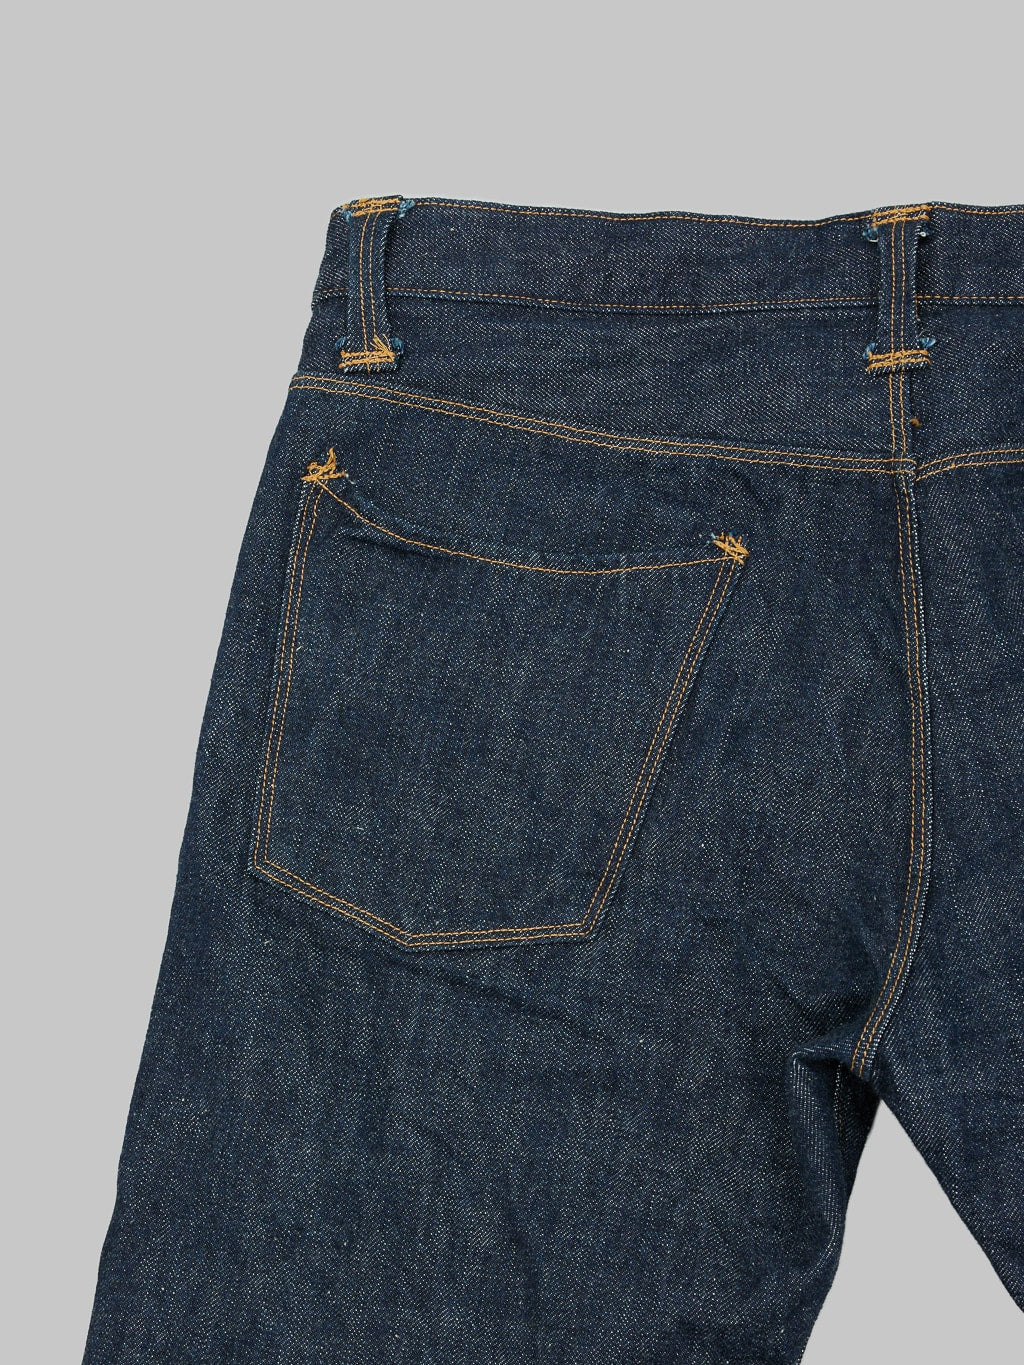 Stevenson Overall La Jolla 727 Slim Tapered Jeans texture